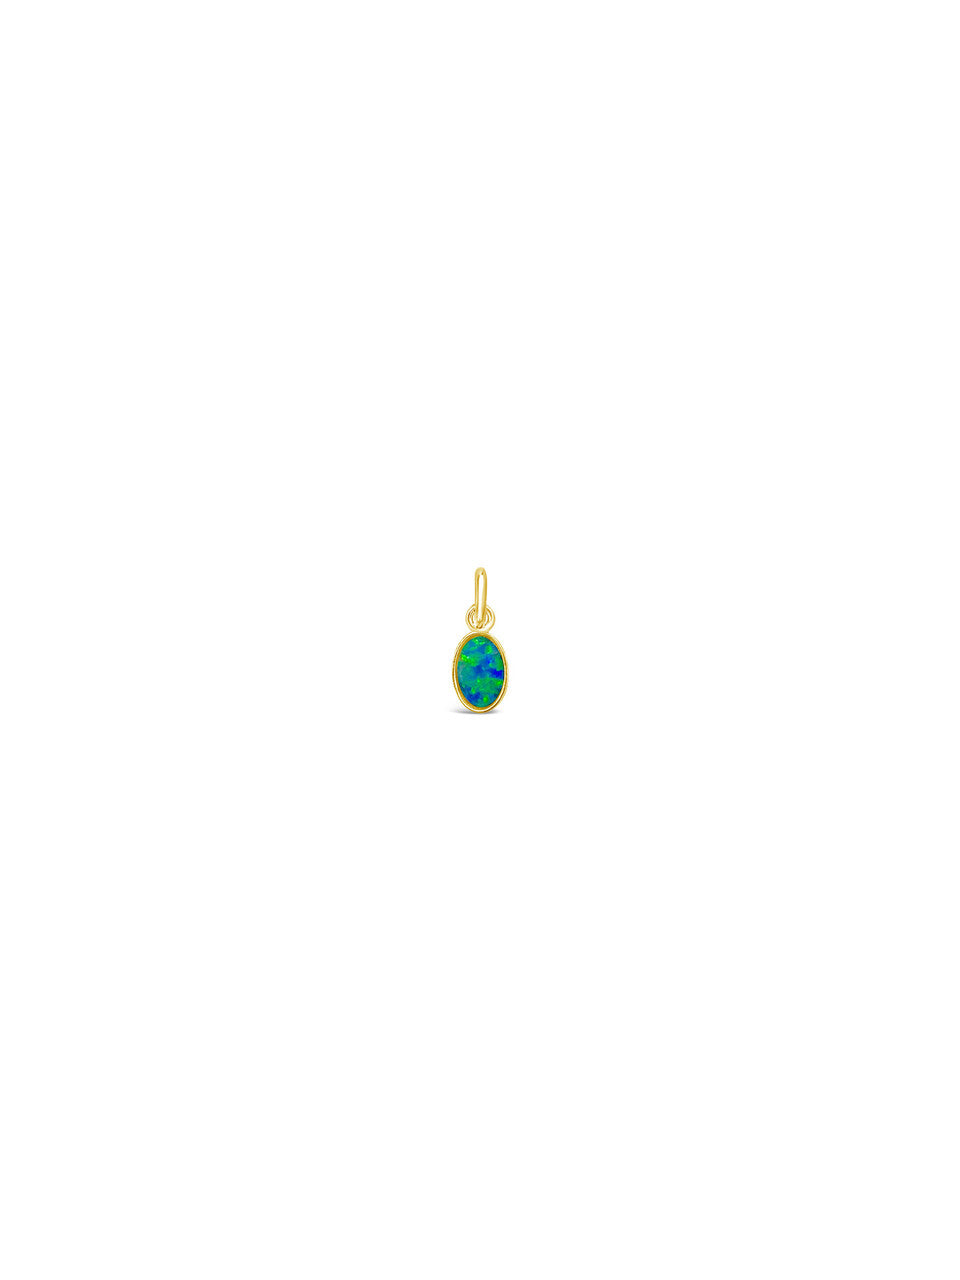 Ichu Oval Opal Charm Gold - OP5005G | Ice Jewellery Australia